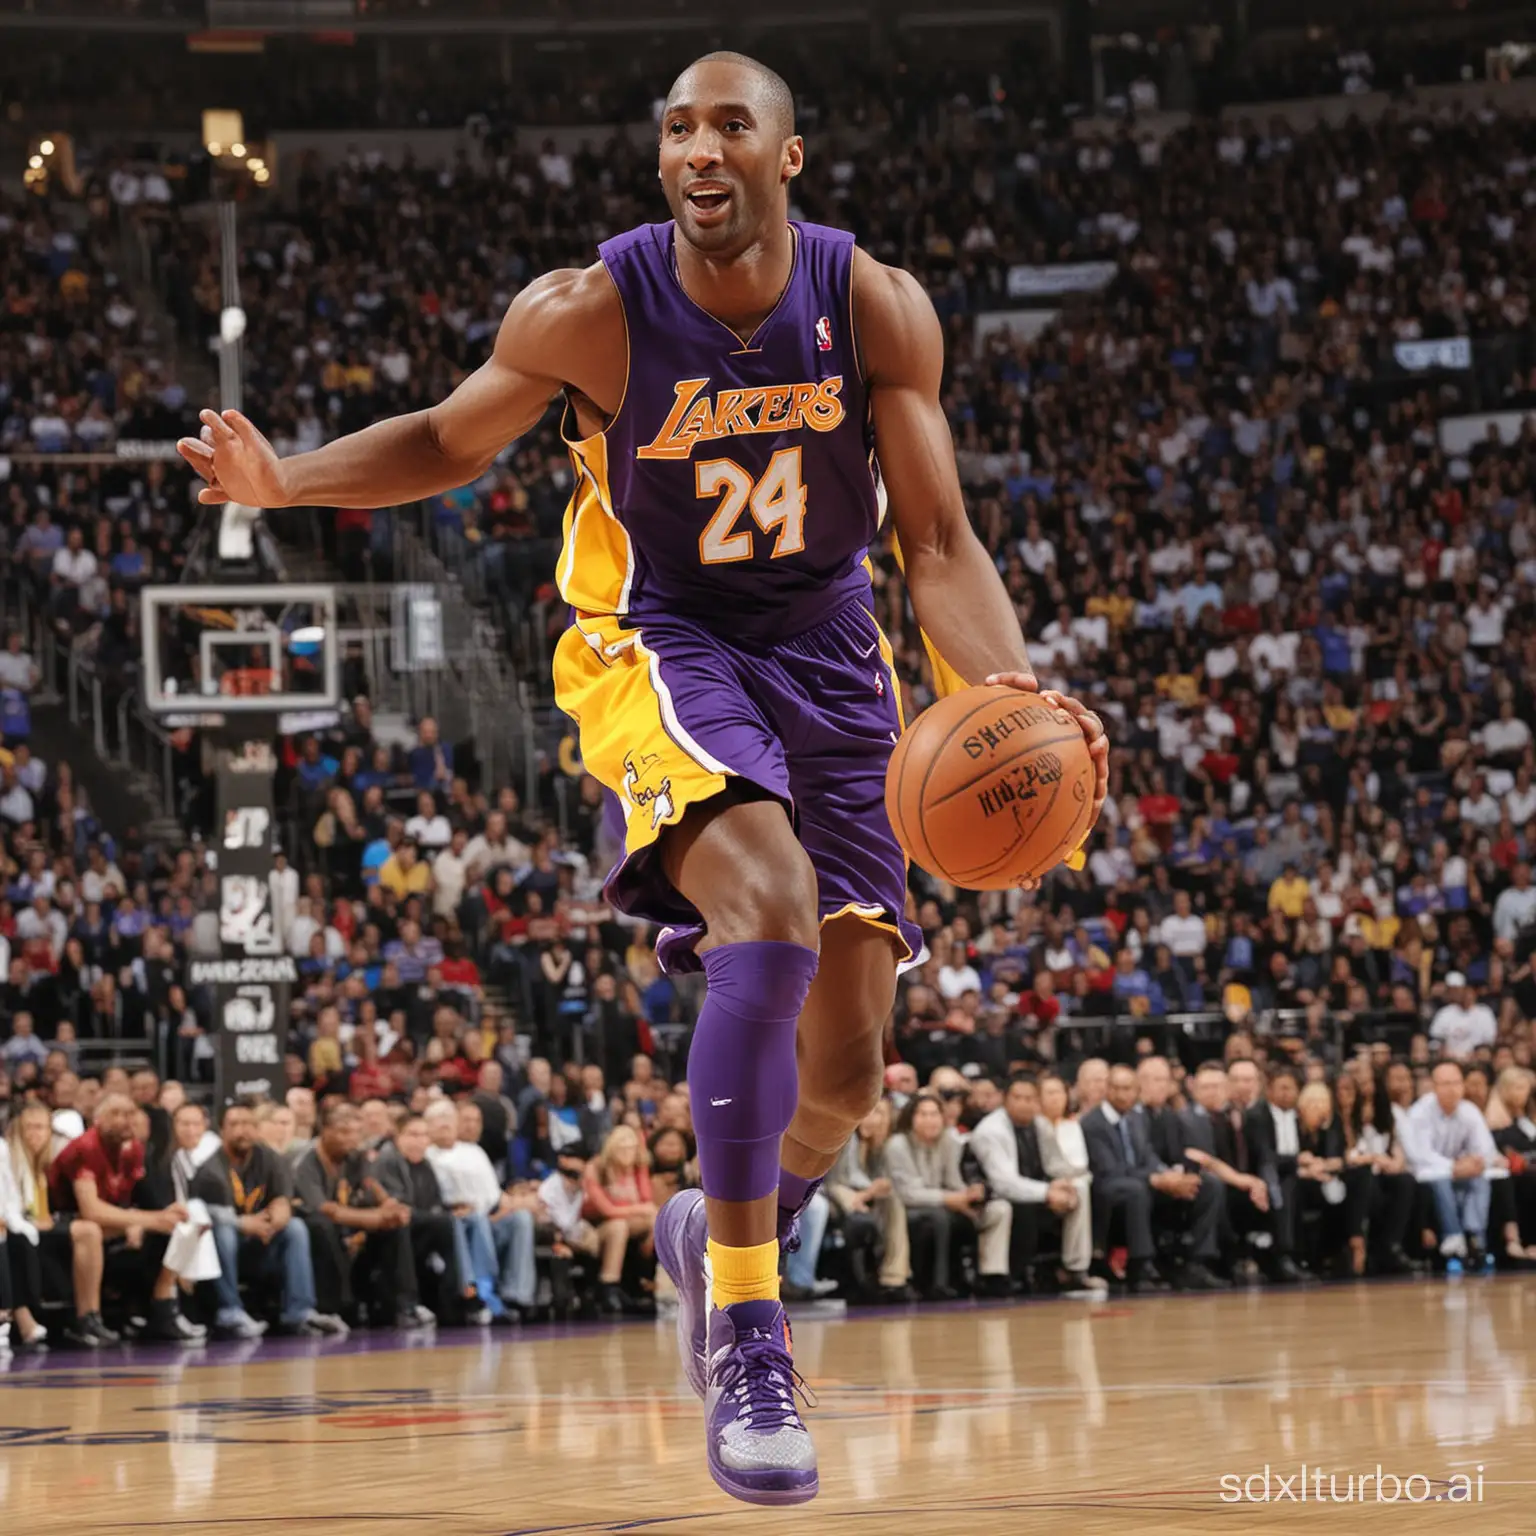 Basketball-Legend-Kobe-Bryant-in-Action